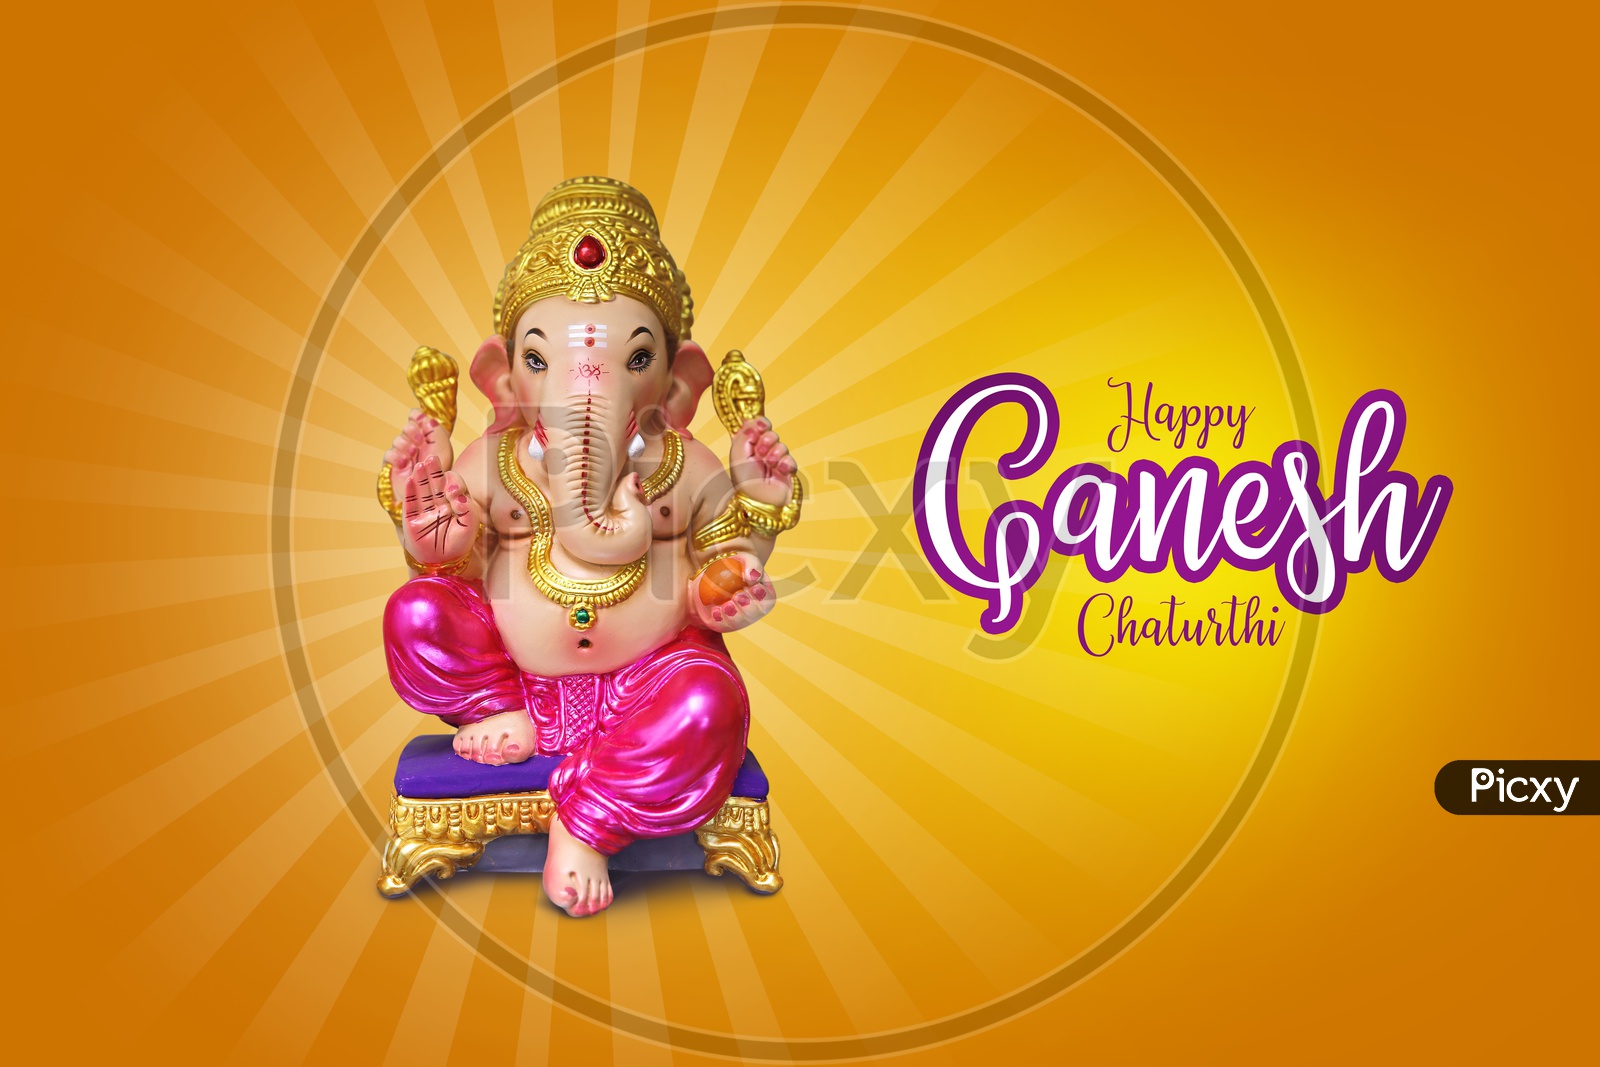 Happy Ganesh Chaturthi poster with Lord Ganesh Idol